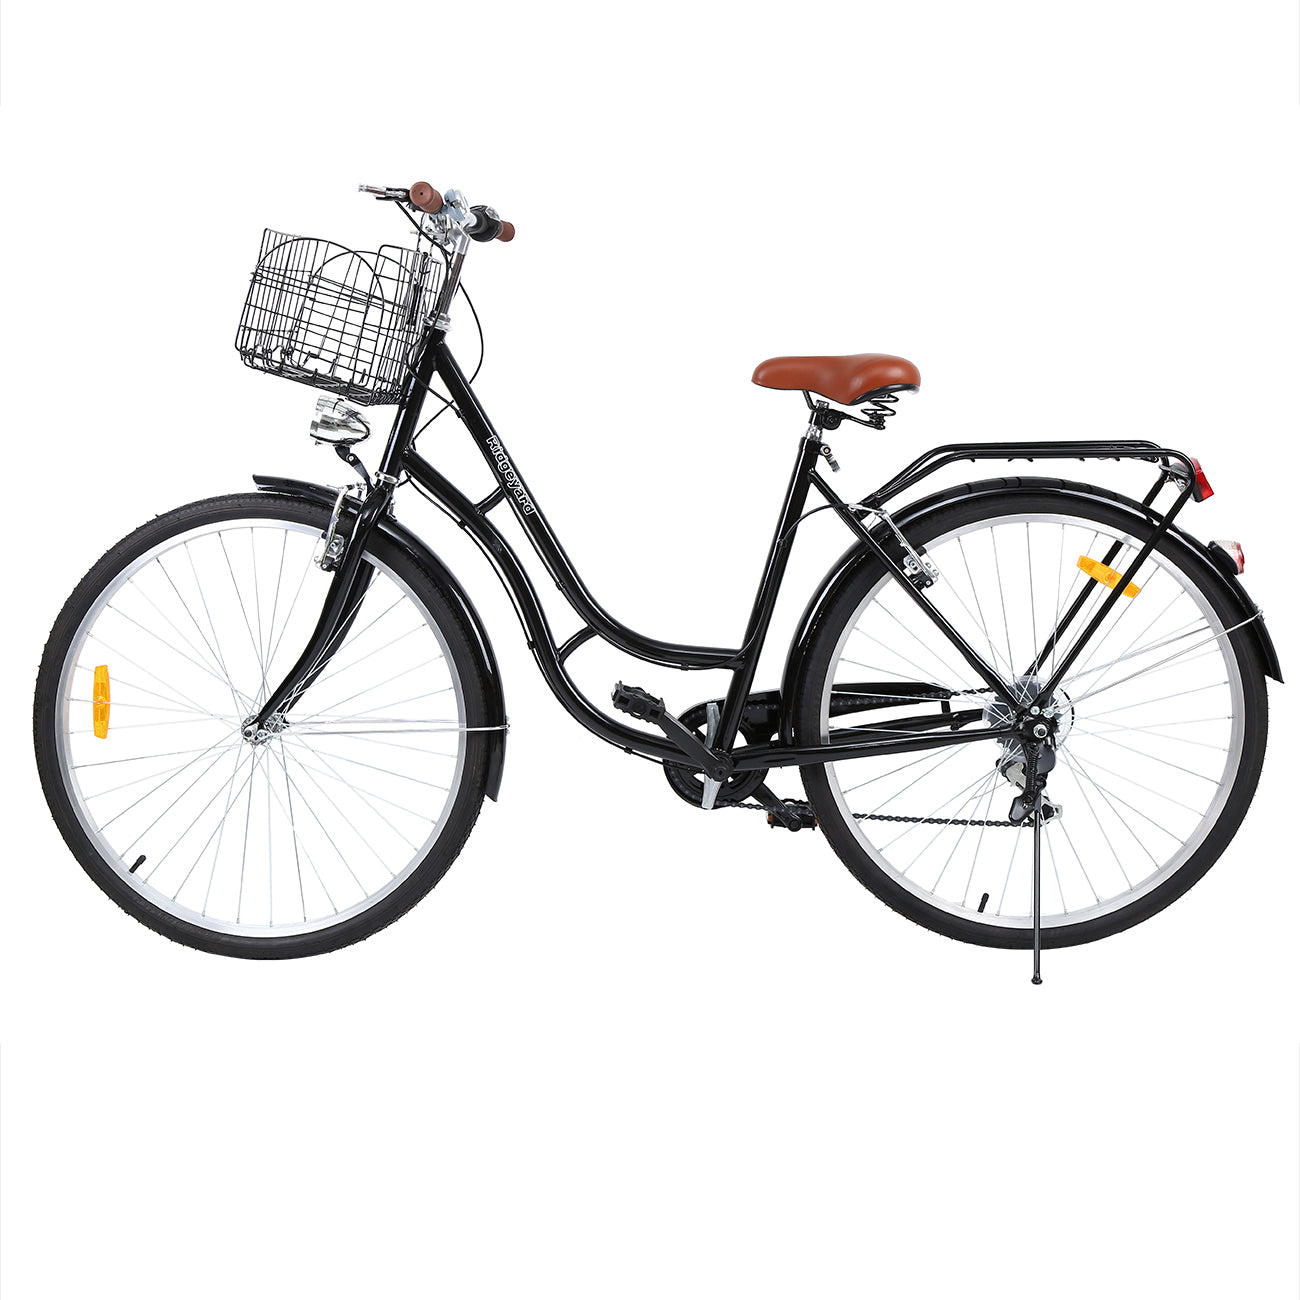 28 Inches 7 Speeds Vintage City Bike Ladies Bike Outdoor Sports City Urban Bicycle Shopper Bike Woman Bikes with Baskets (Black)